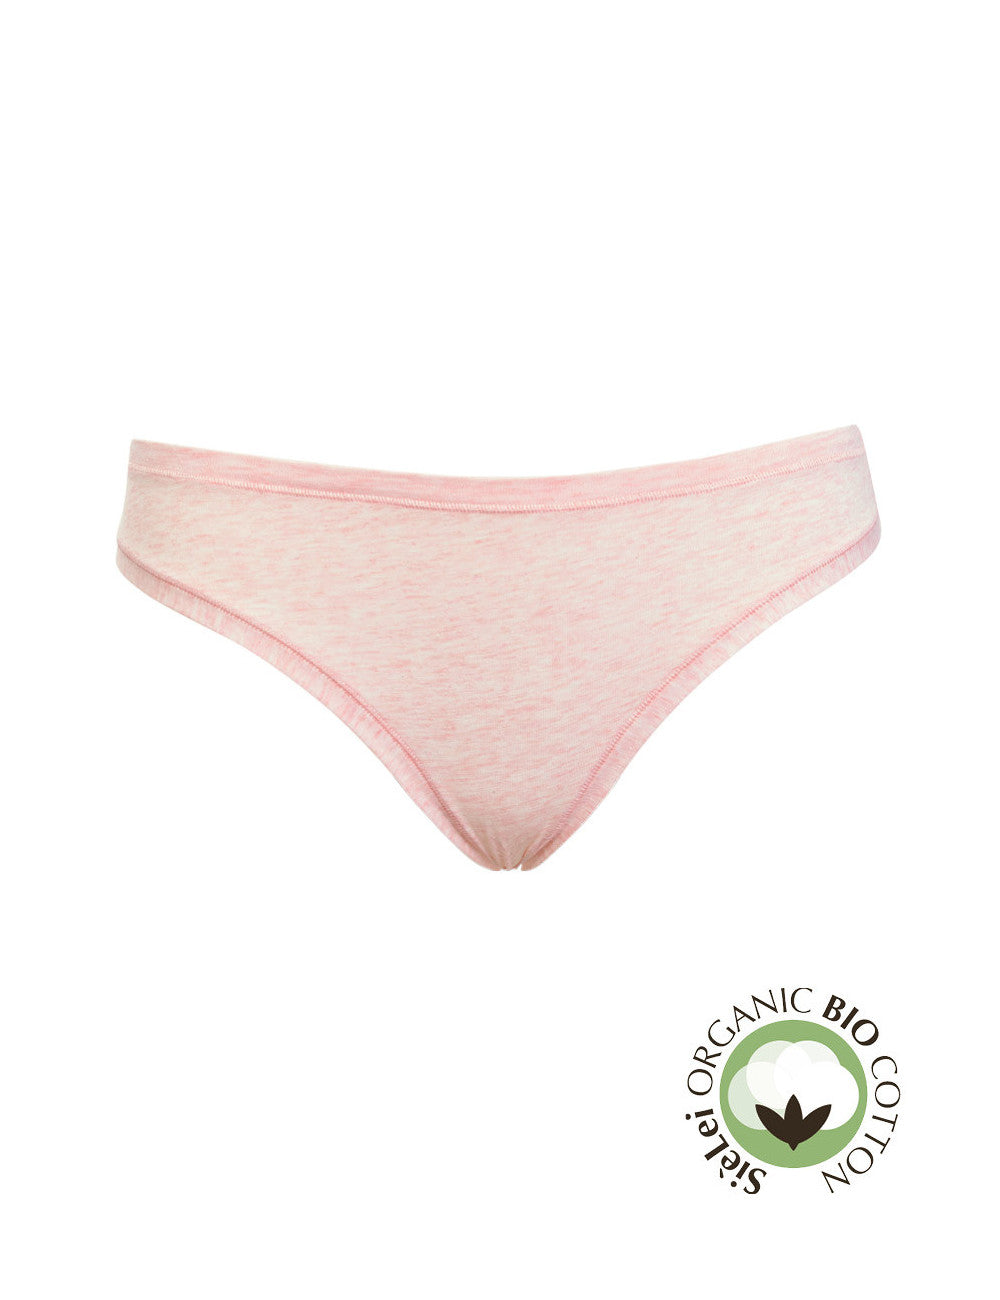 Alexa 100% Brazilian Underwear. Women's Ruched Panty. Cheeky Half Back  Panties (Light Pink, Large)